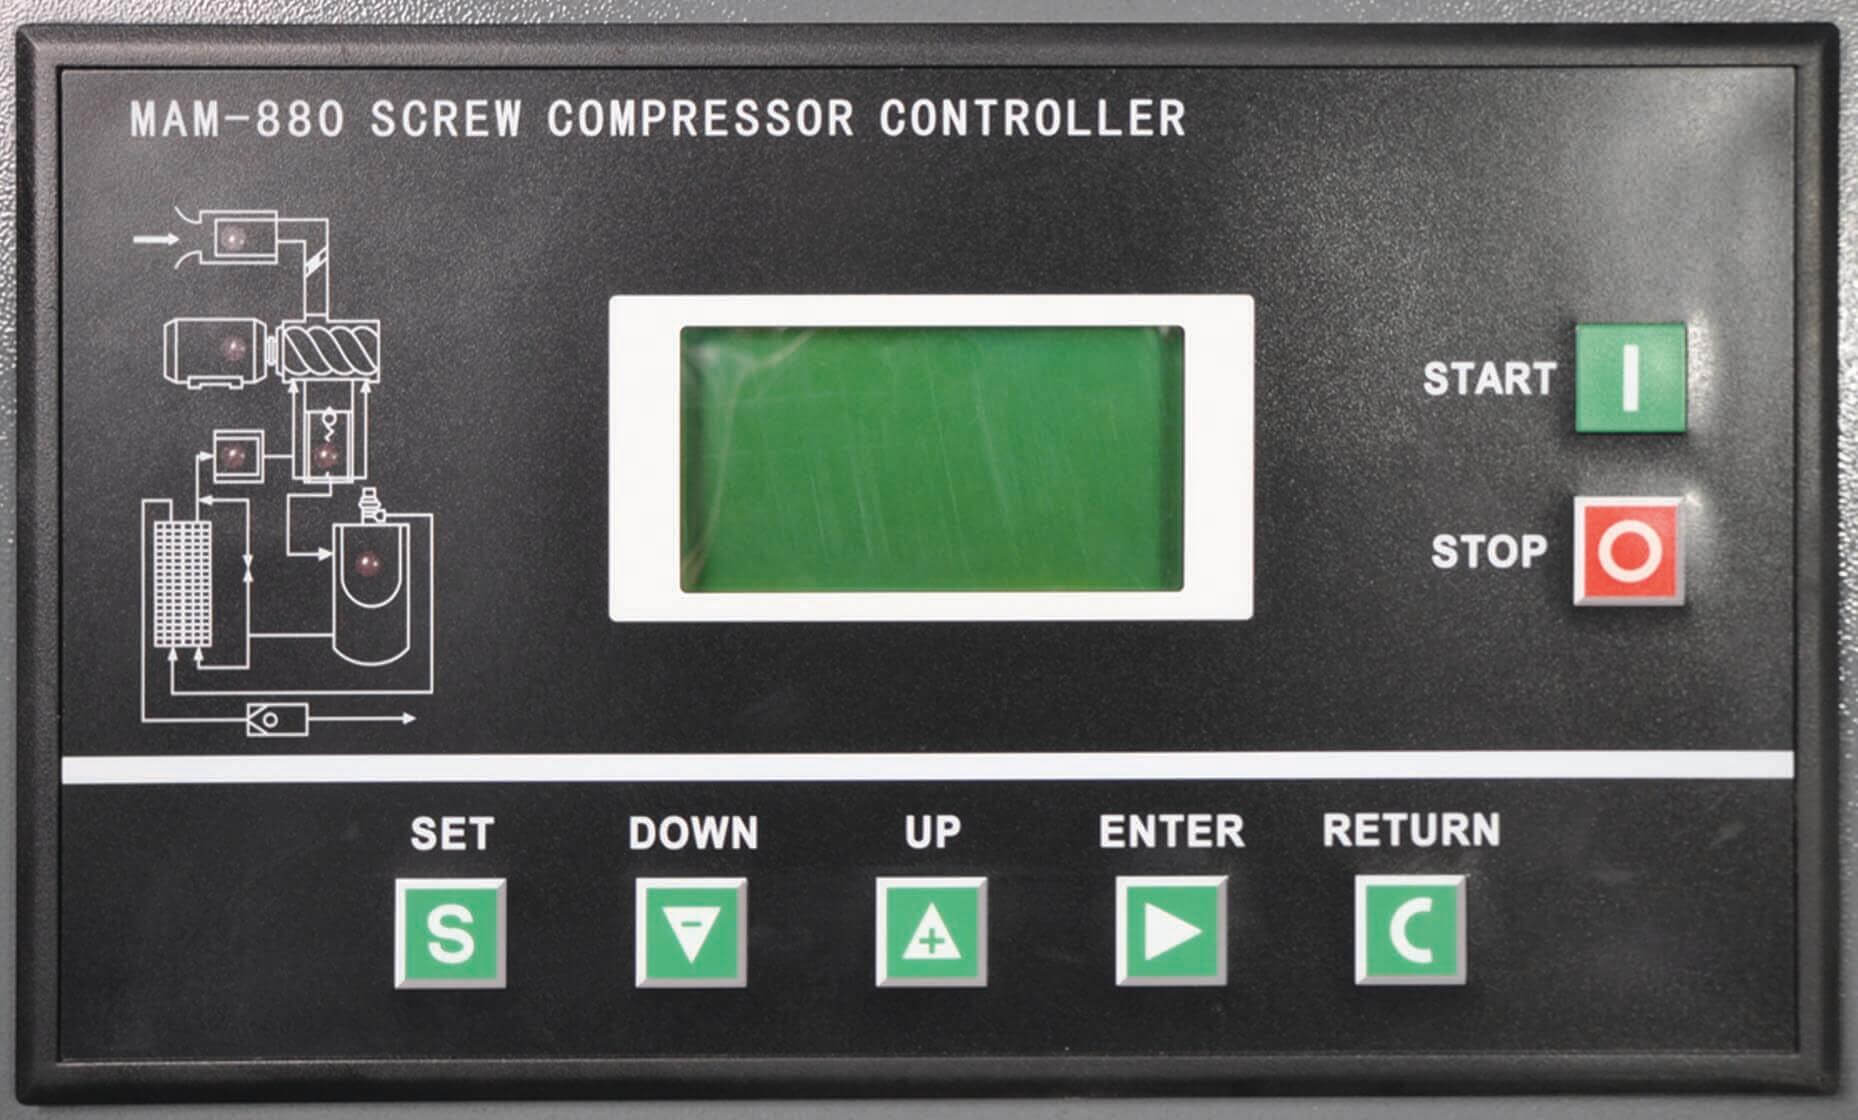 Thorite 1/2" BSP Compressed Air Pneumatic Filter Regulator with Gauge FR308G 